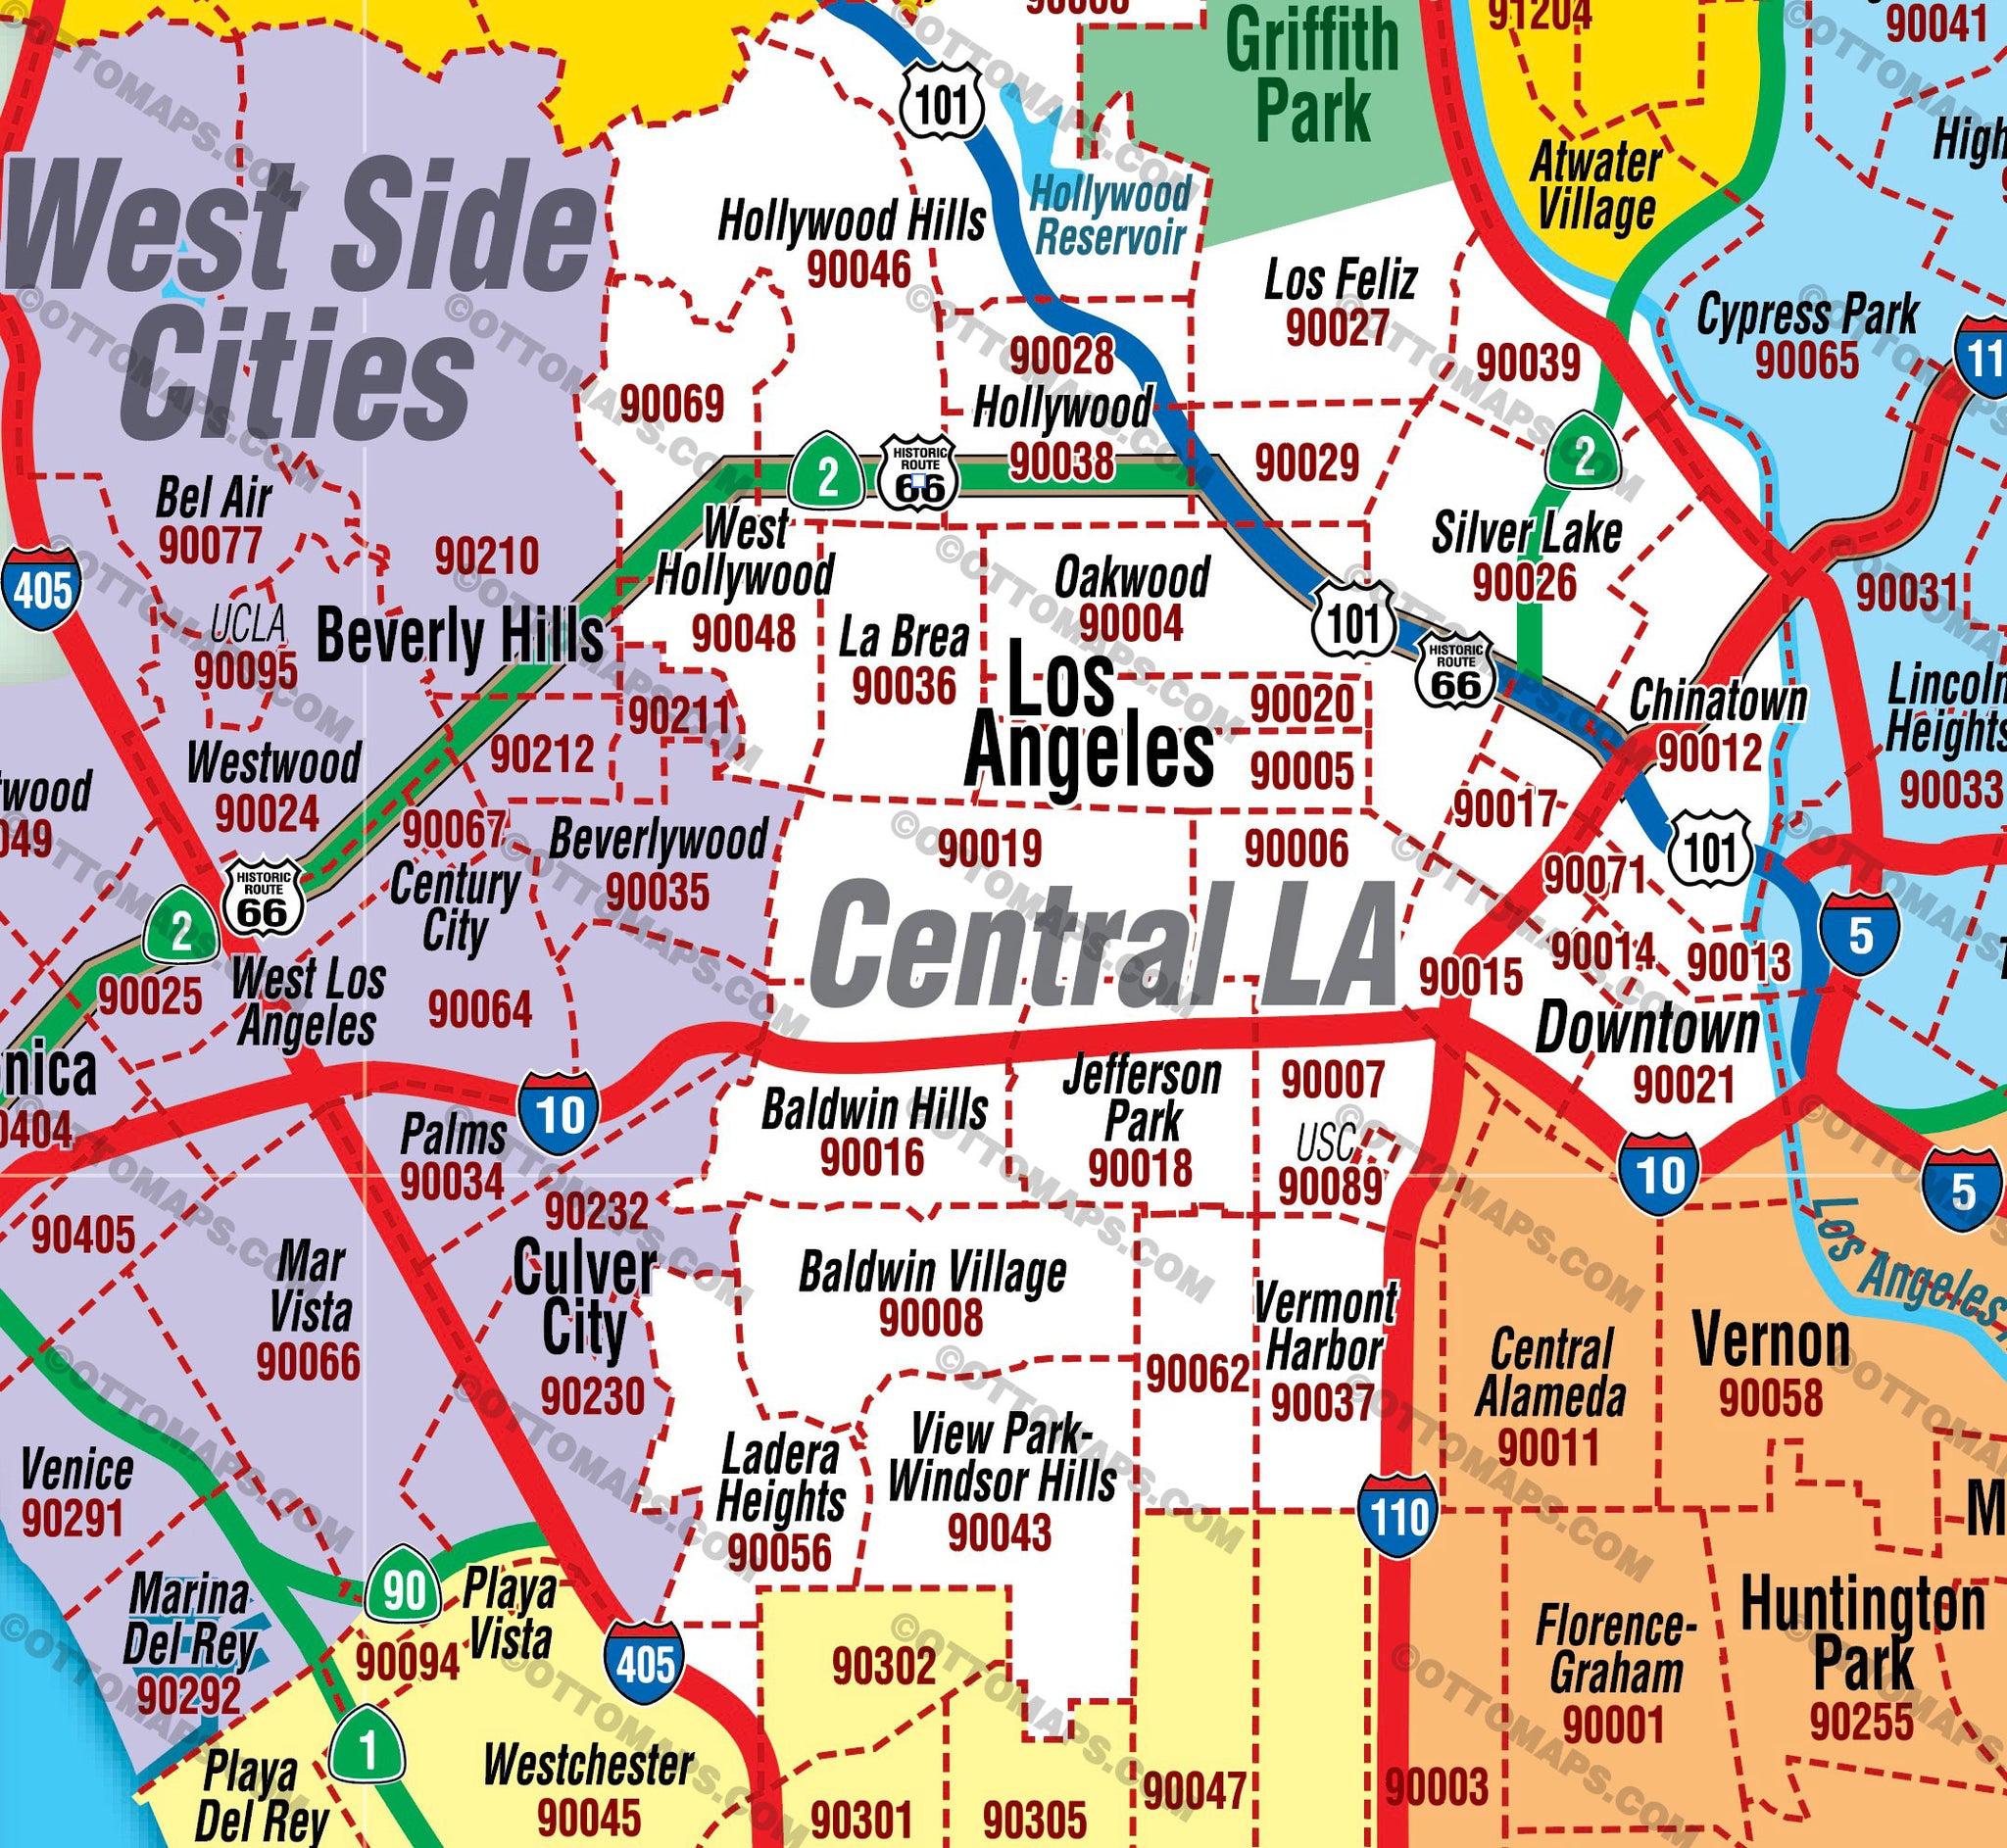 los angeles orange county zip code map Los Angeles Zip Code Map Full County Areas Colorized Otto Maps los angeles orange county zip code map